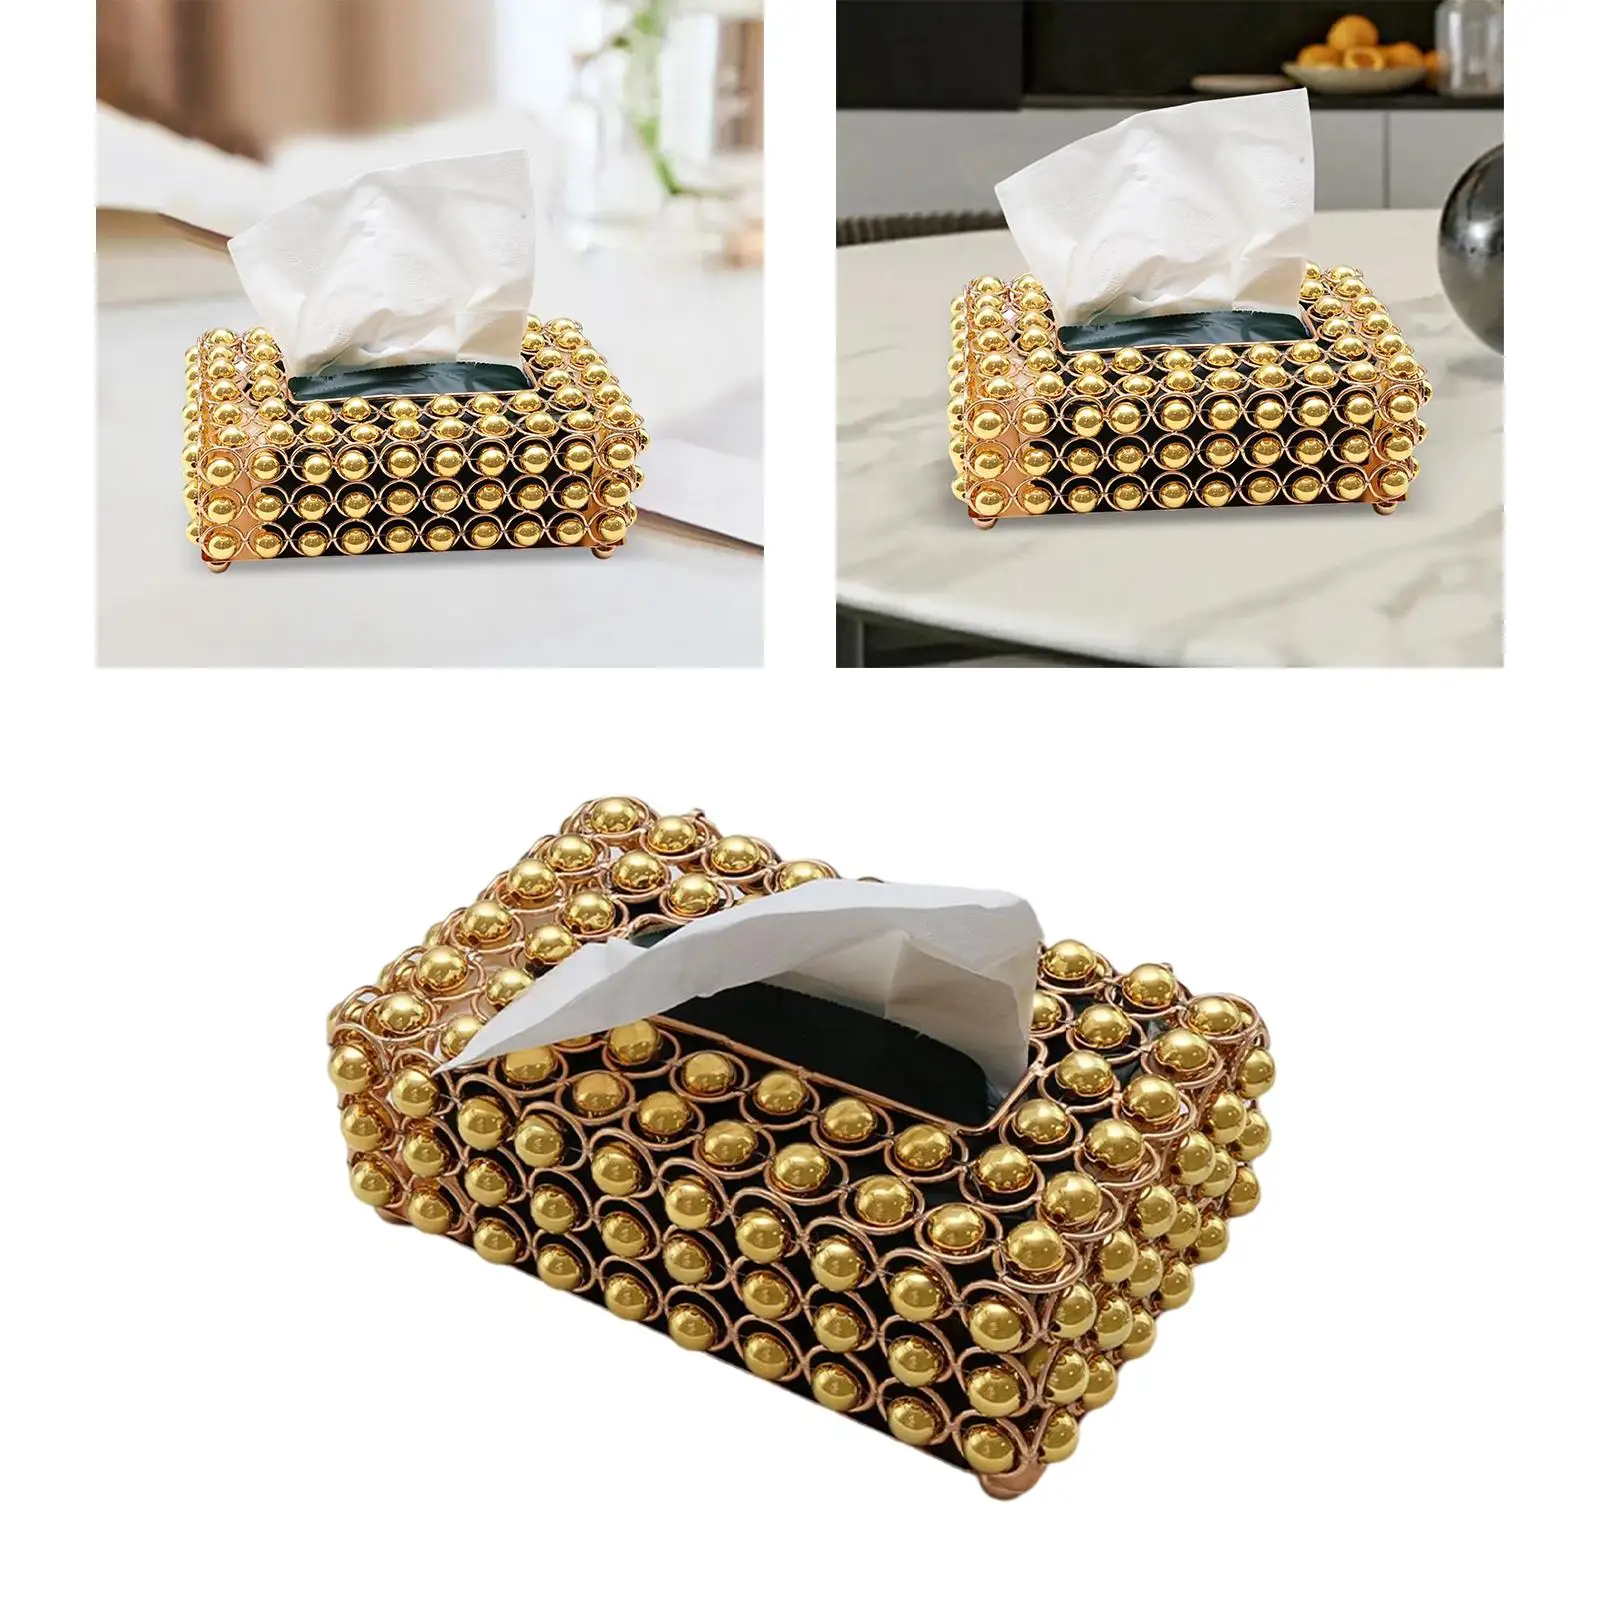 Golden Metal Simulation Pearl Facial Tissue Case for Desk Table Wedding Table Centerpiece Rectangular Toliet Paper Box Elegant